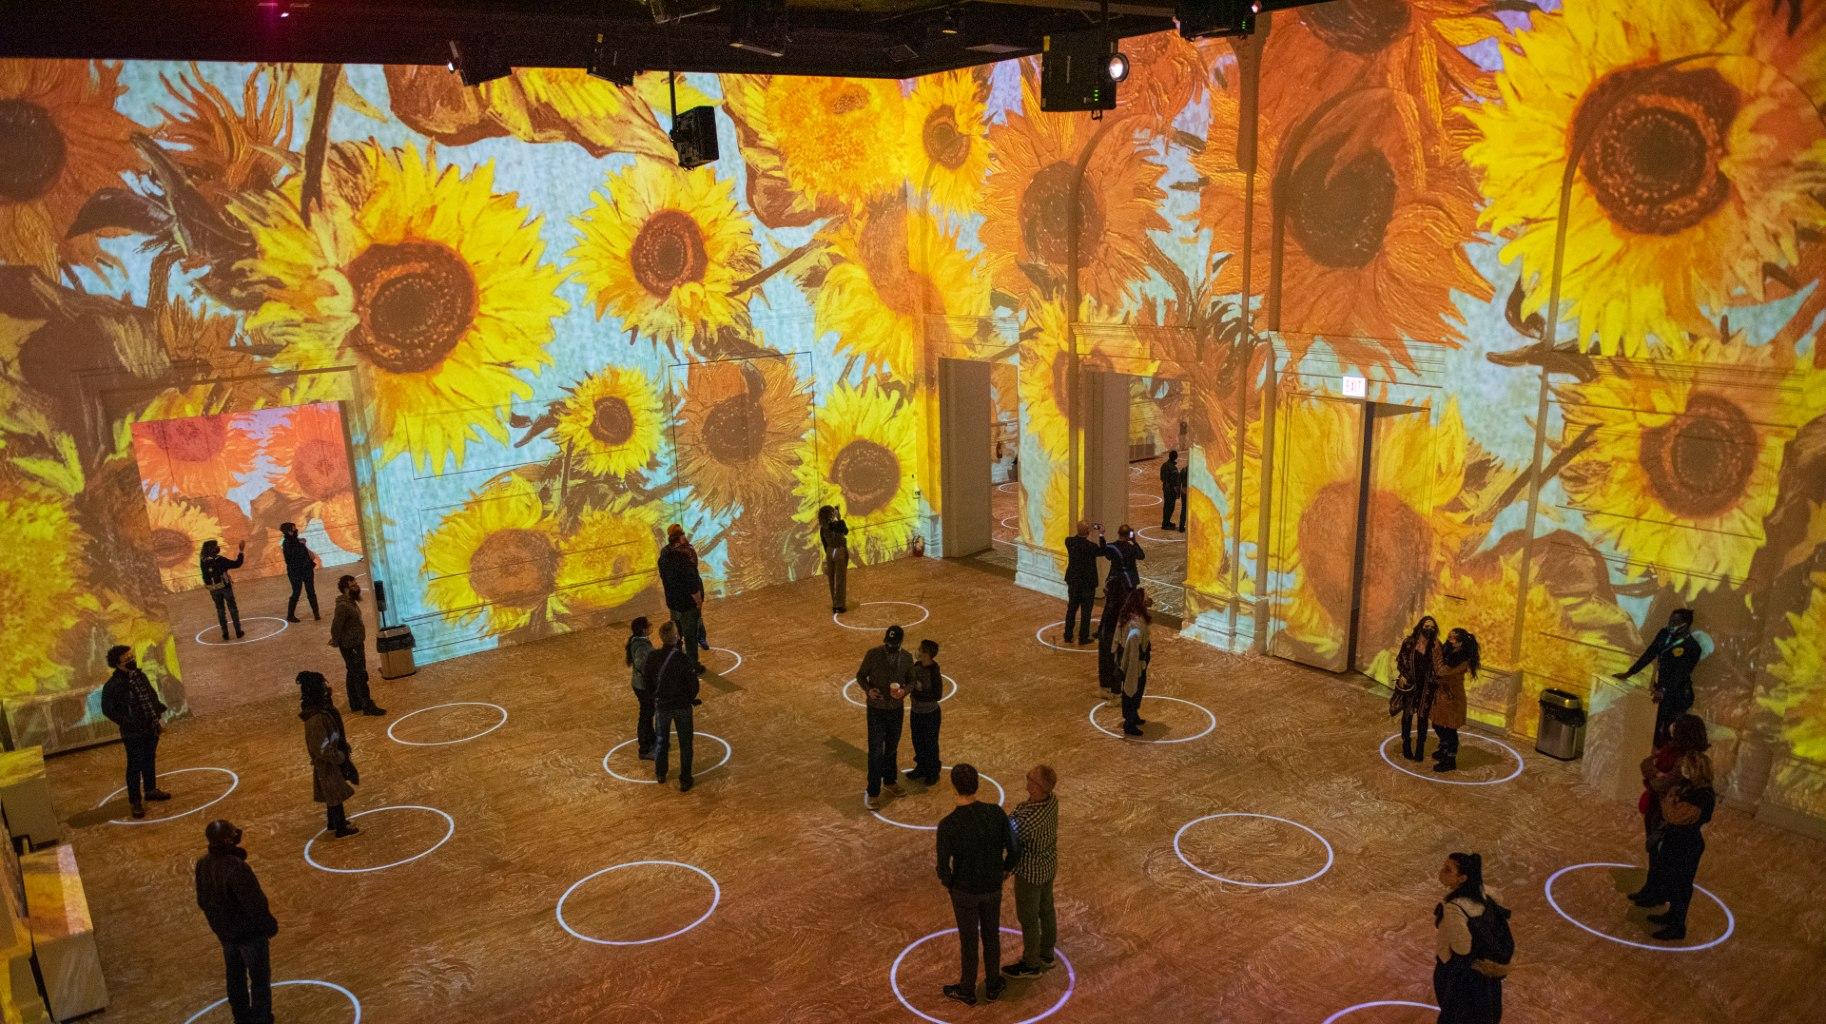 Inside the Immersive Van Gogh exhibit. (Michael Brosilow)